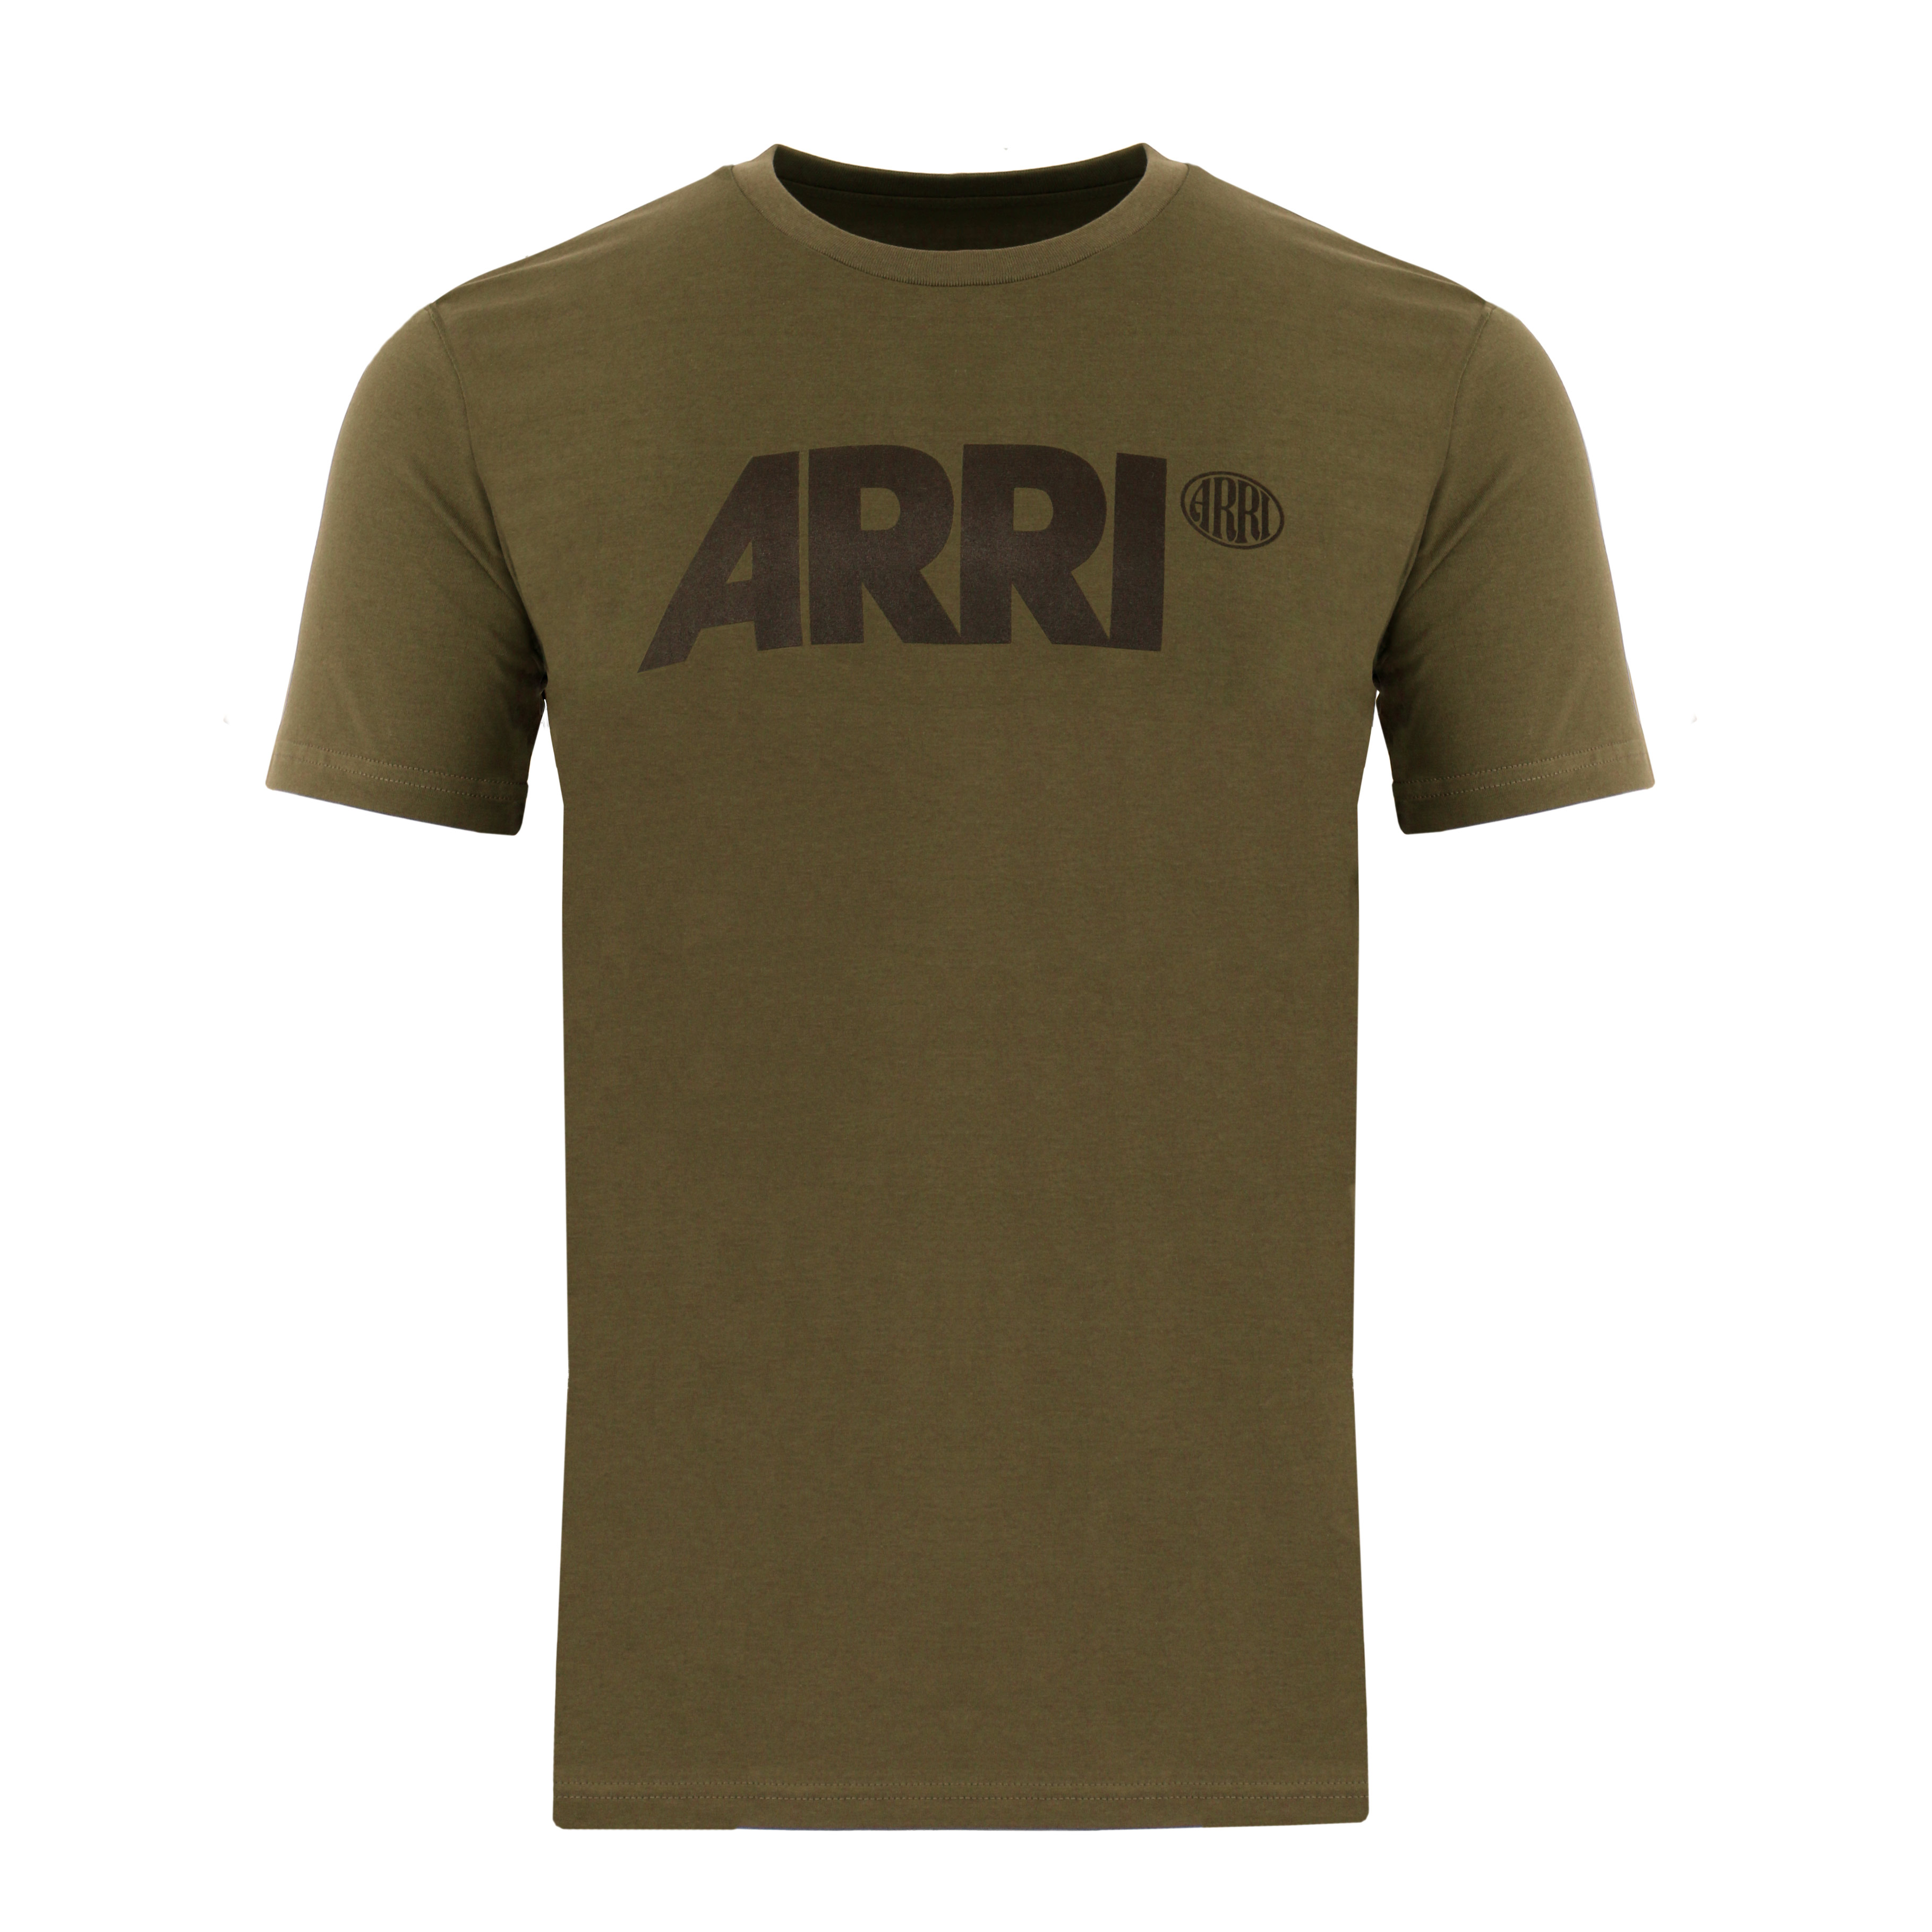 ARRI Unisex T-Shirt in olive green